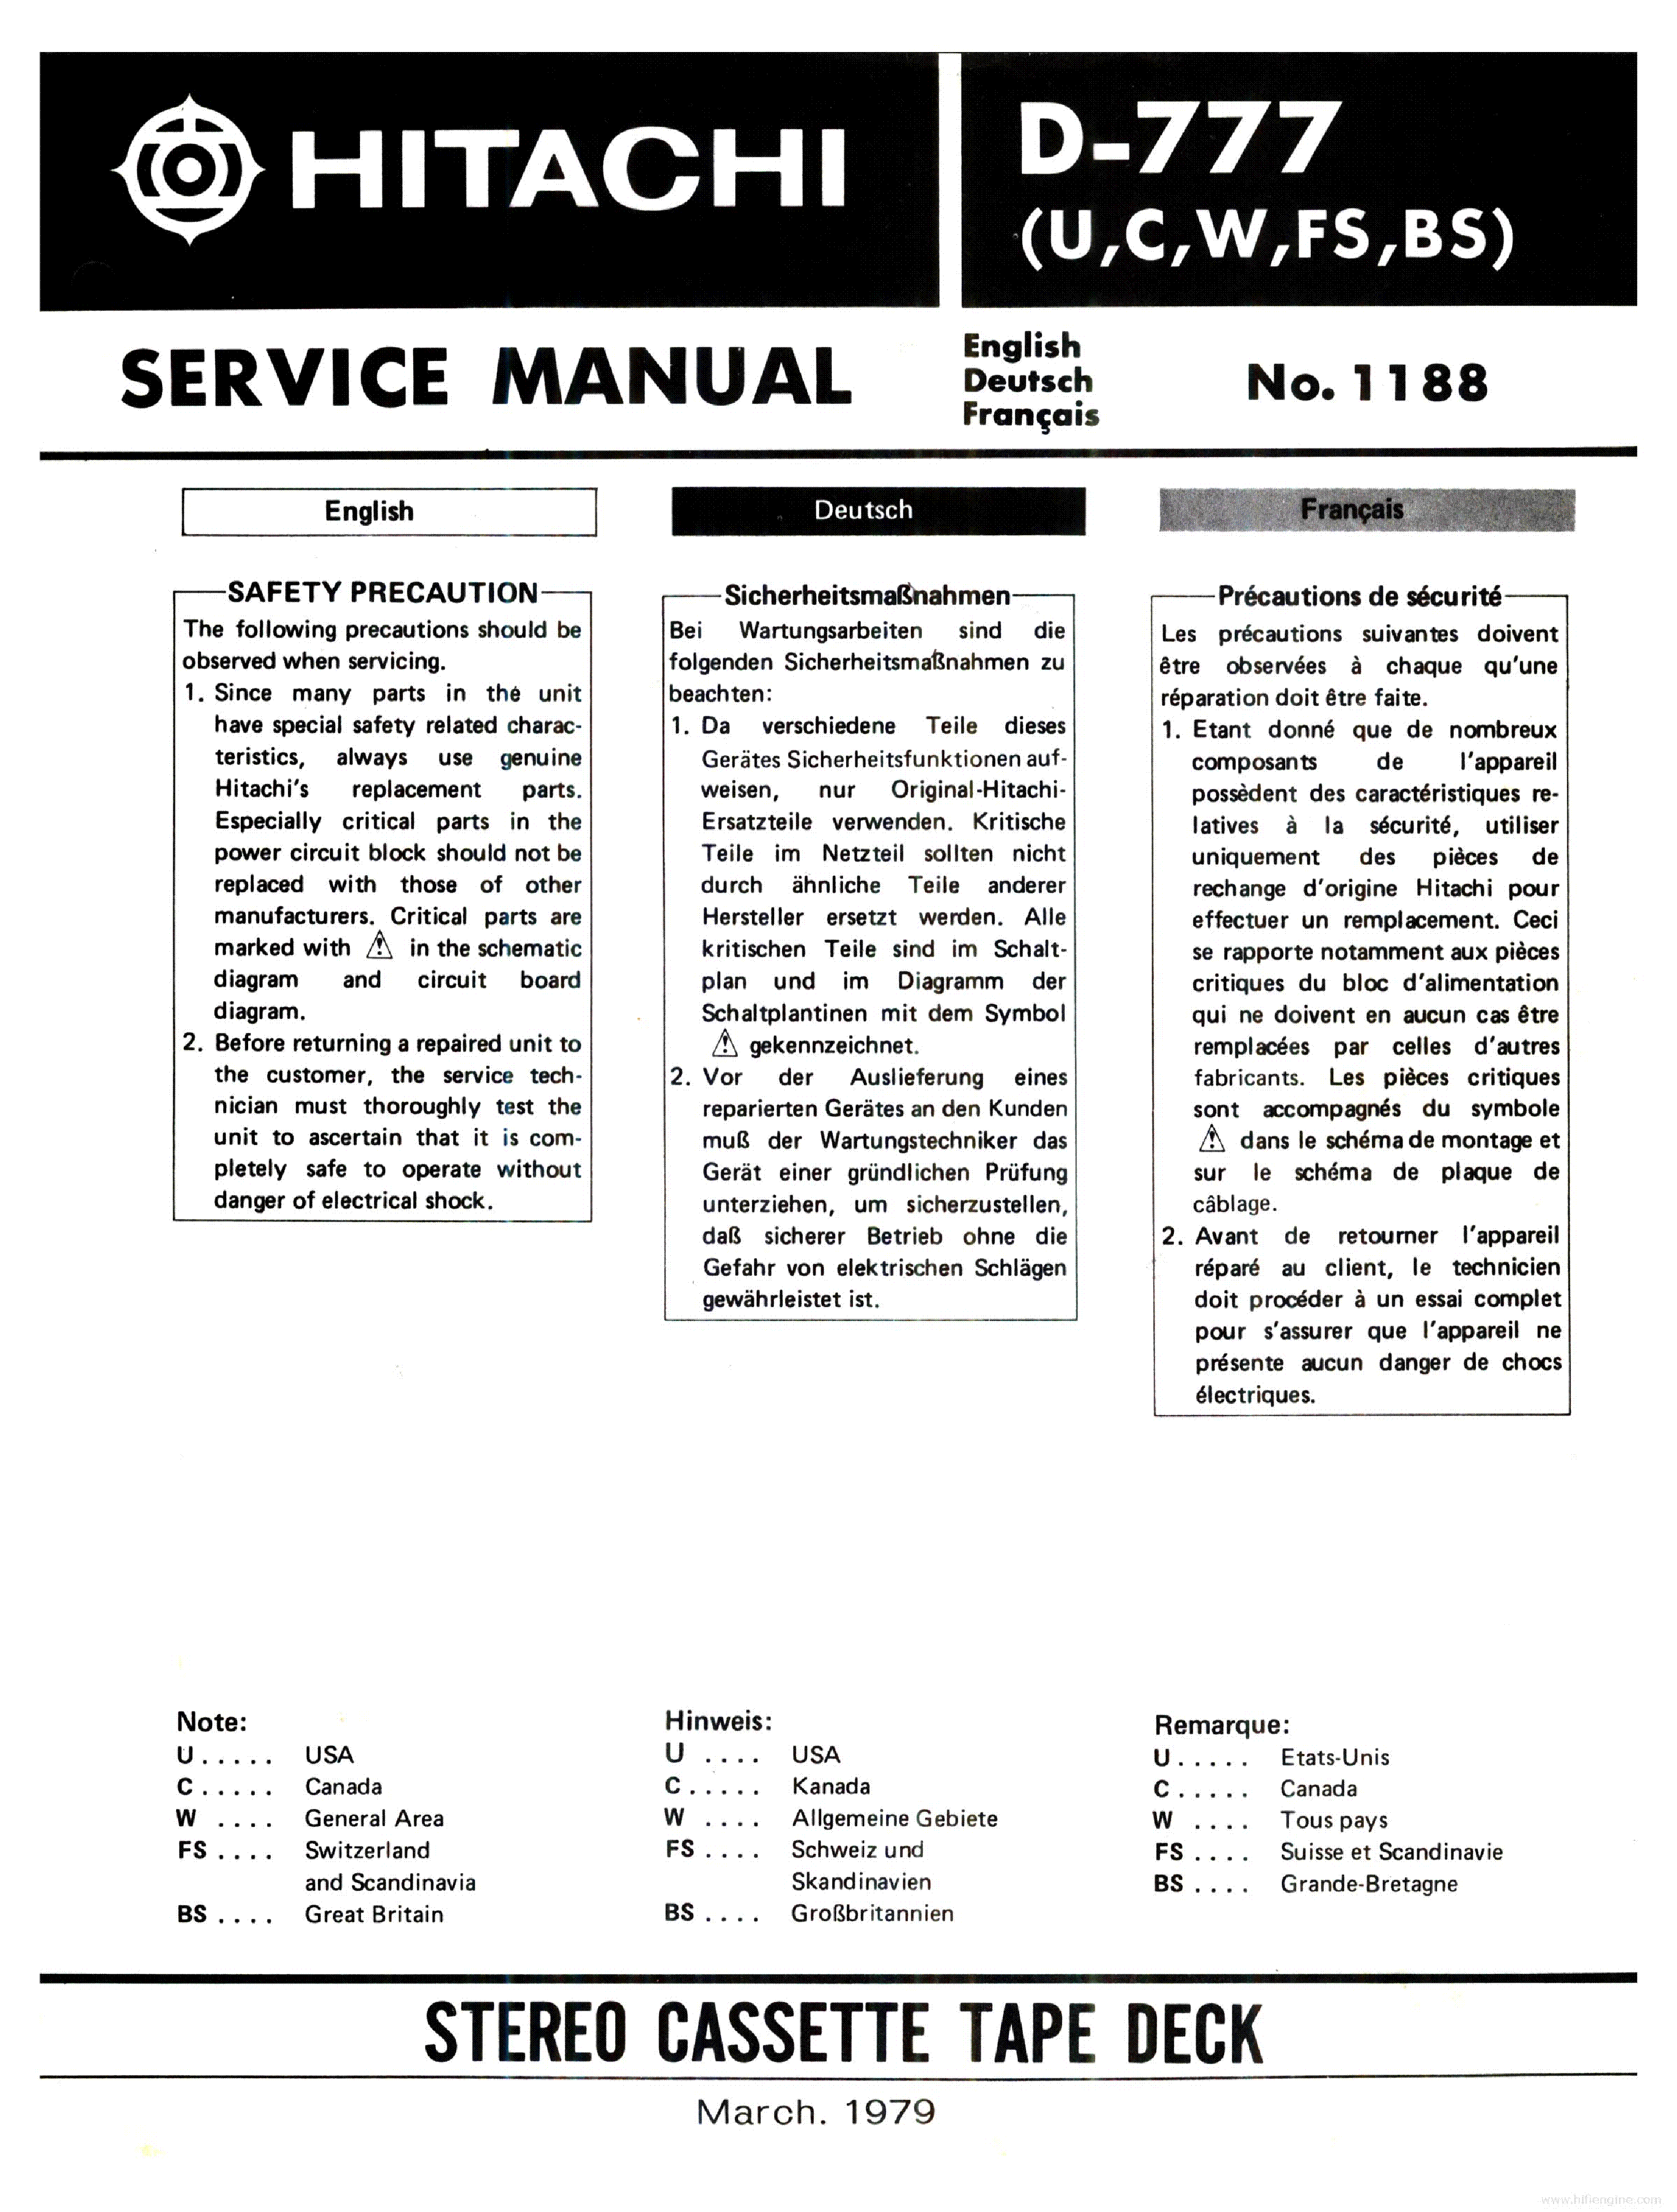 HITACHI D-777 SM service manual (1st page)